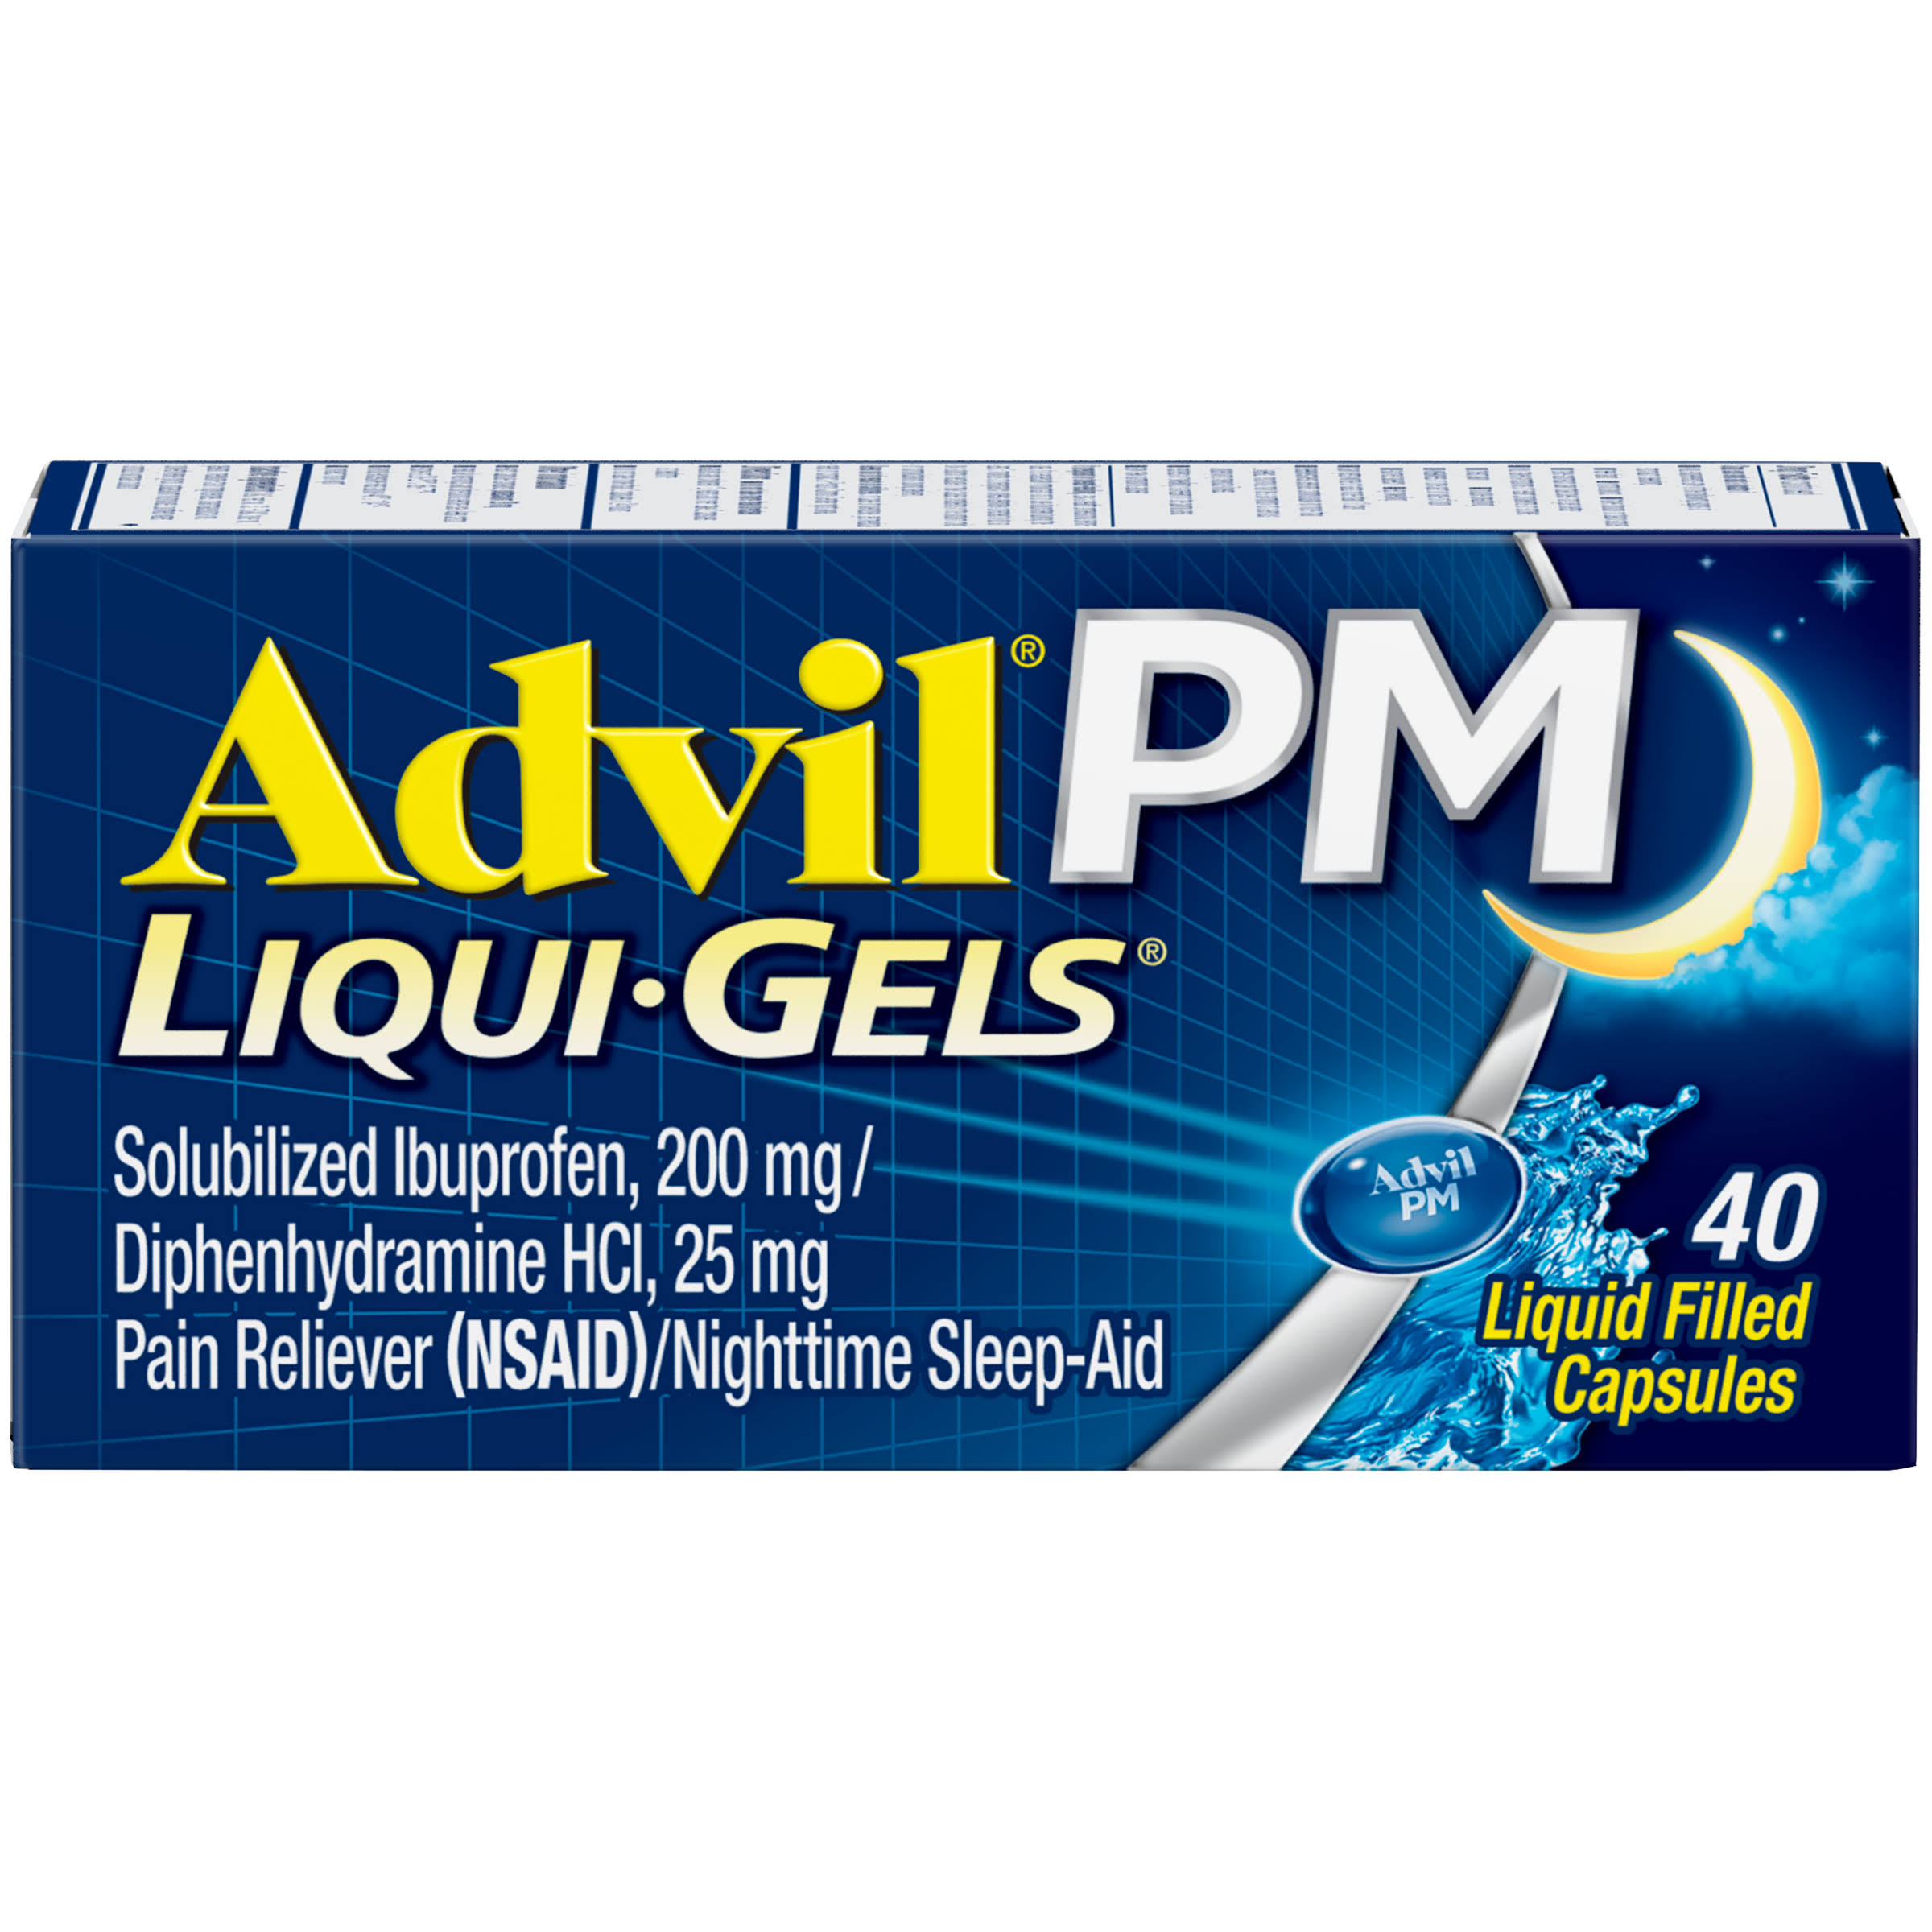 Advil Pm Pain And Nighttime Ibuprofen Sleep Aid Liqui-Gels - 32 Liqui-Gels